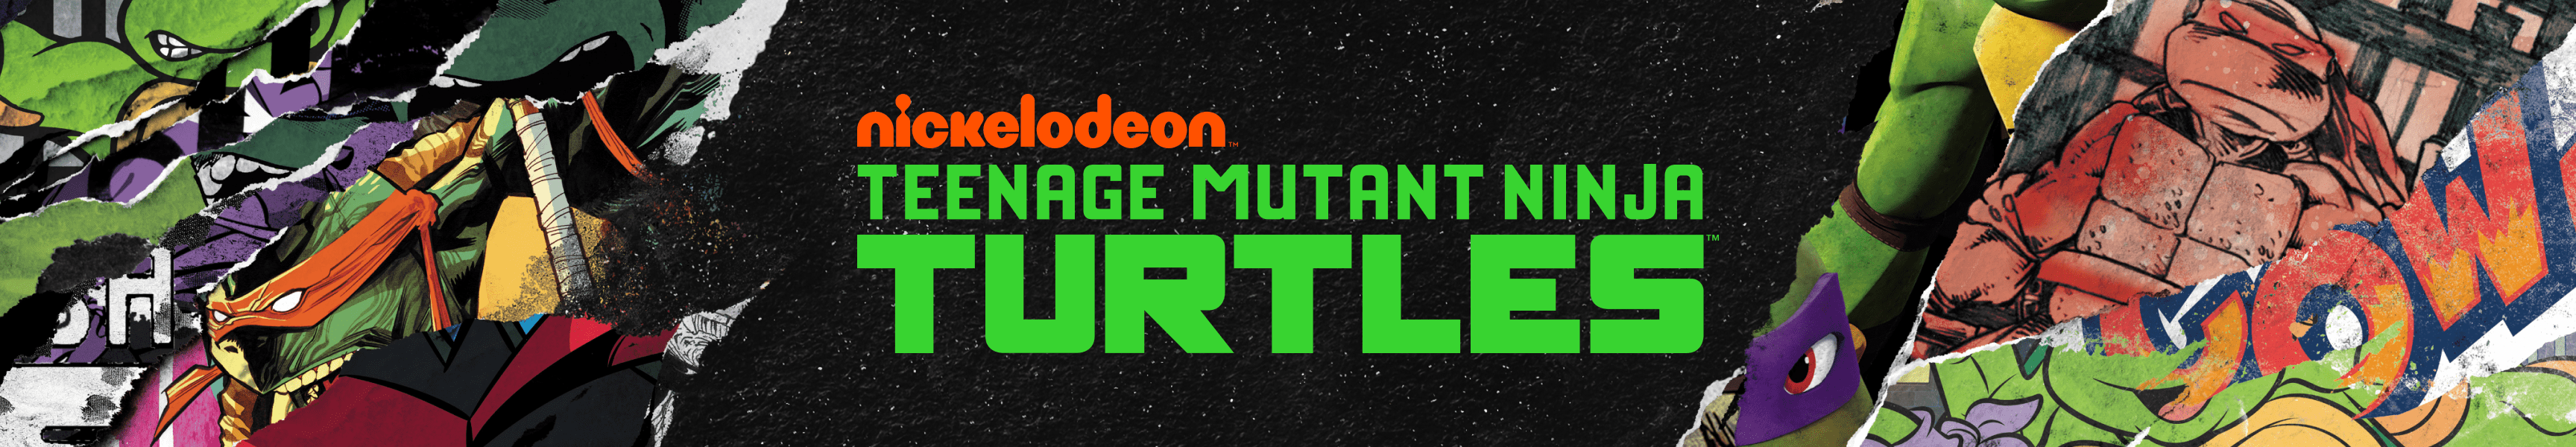 Teenage Mutant Ninja Turtles Hombres's Accesorios